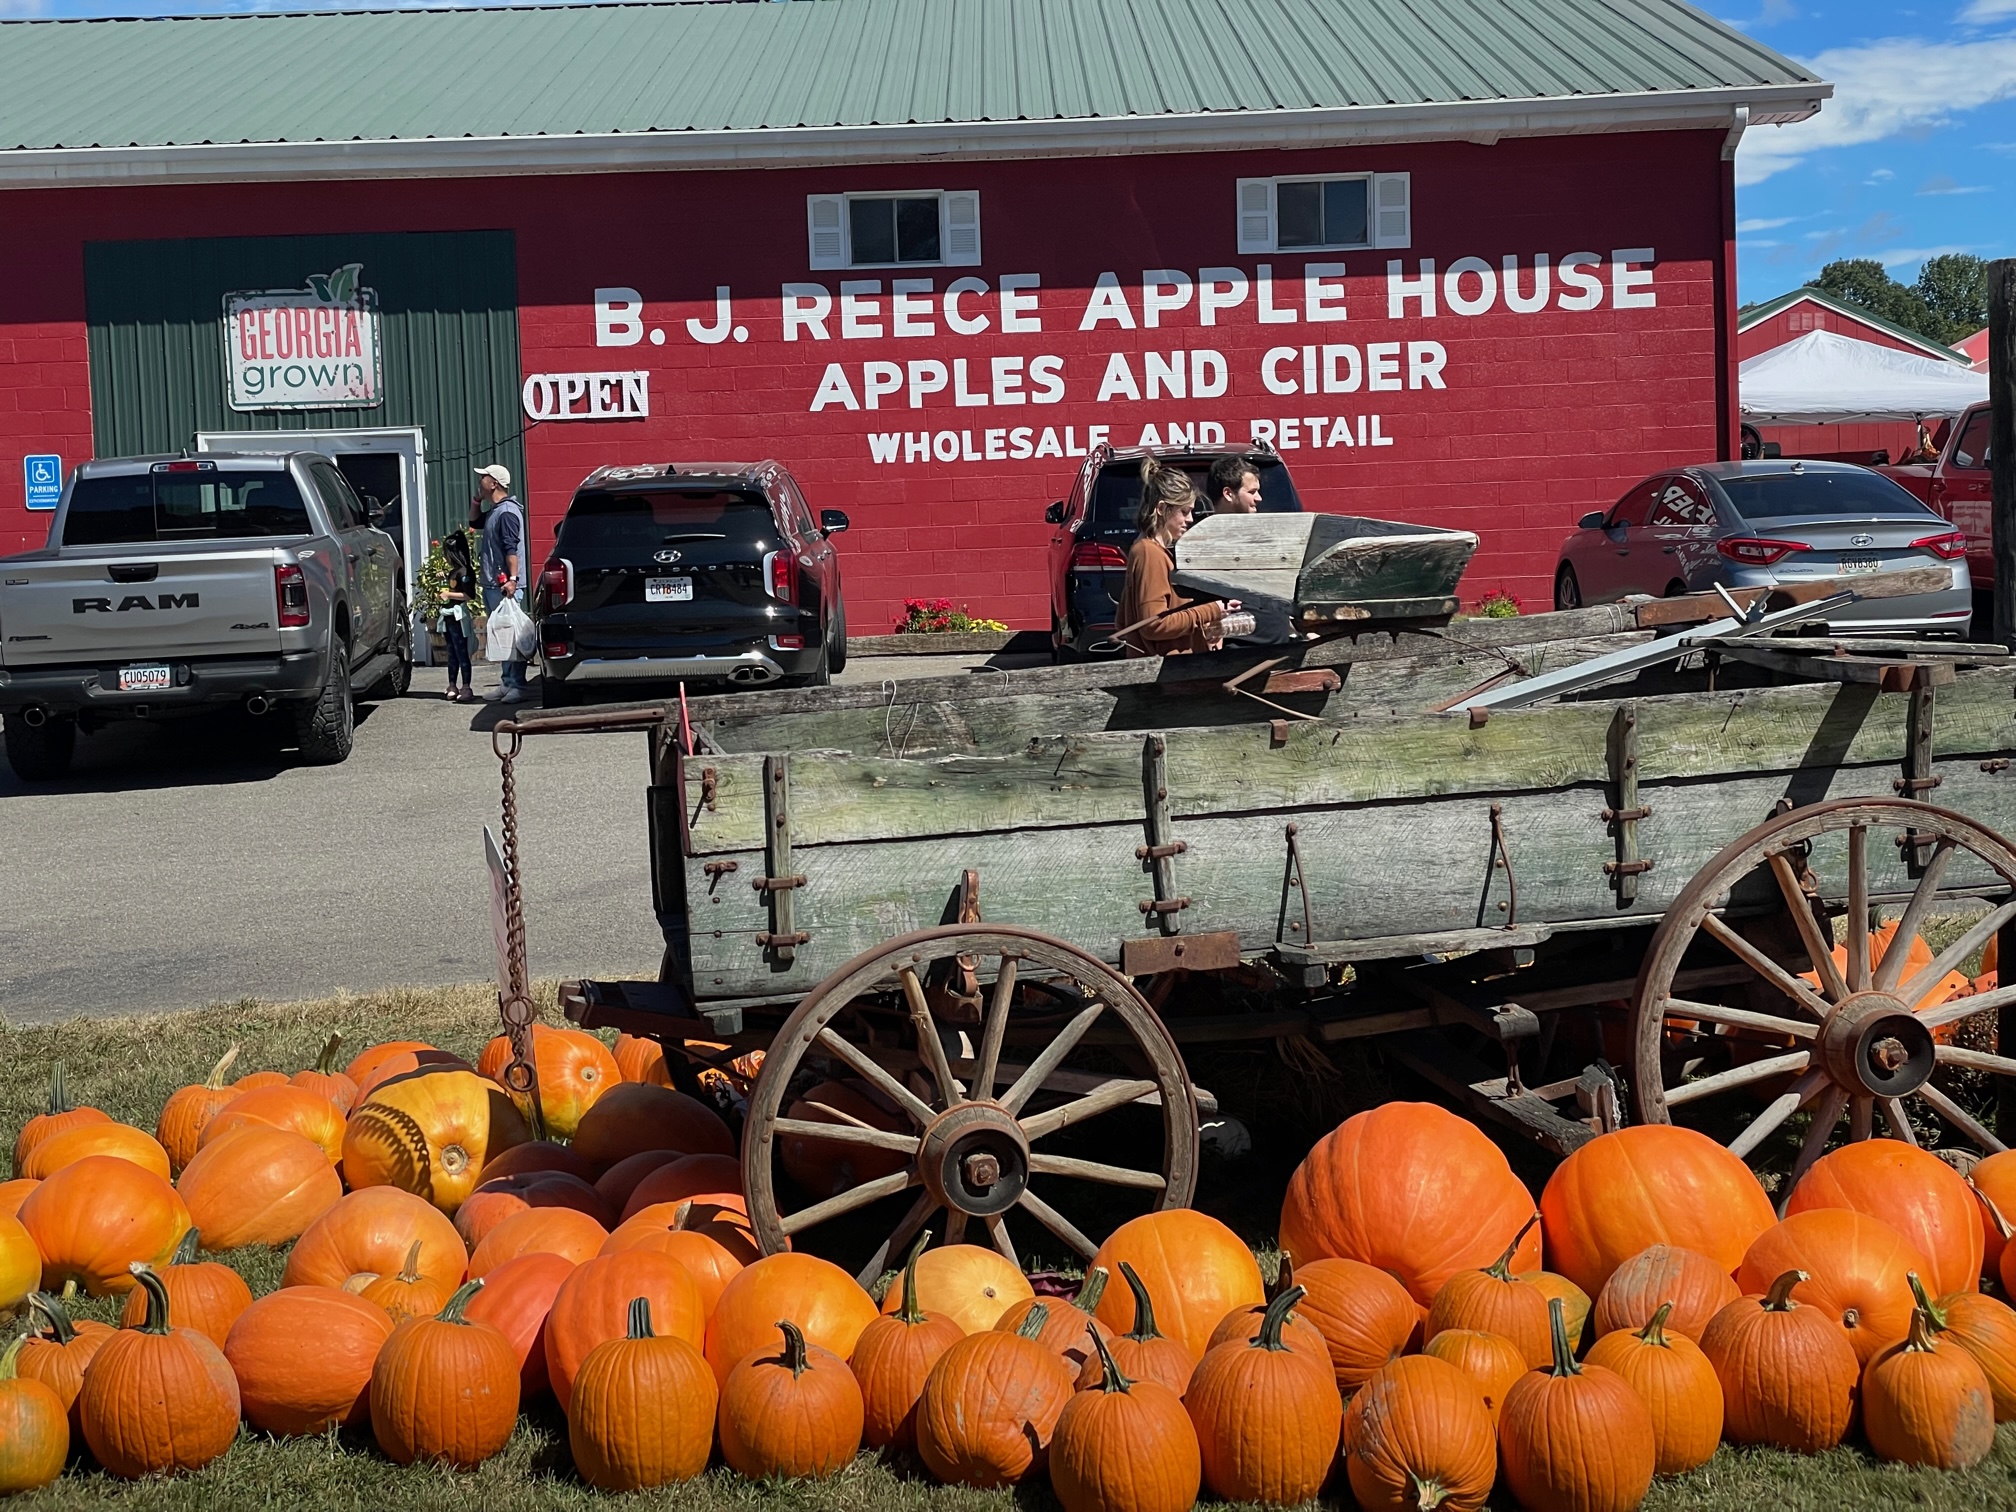 B.J. Reece apple house